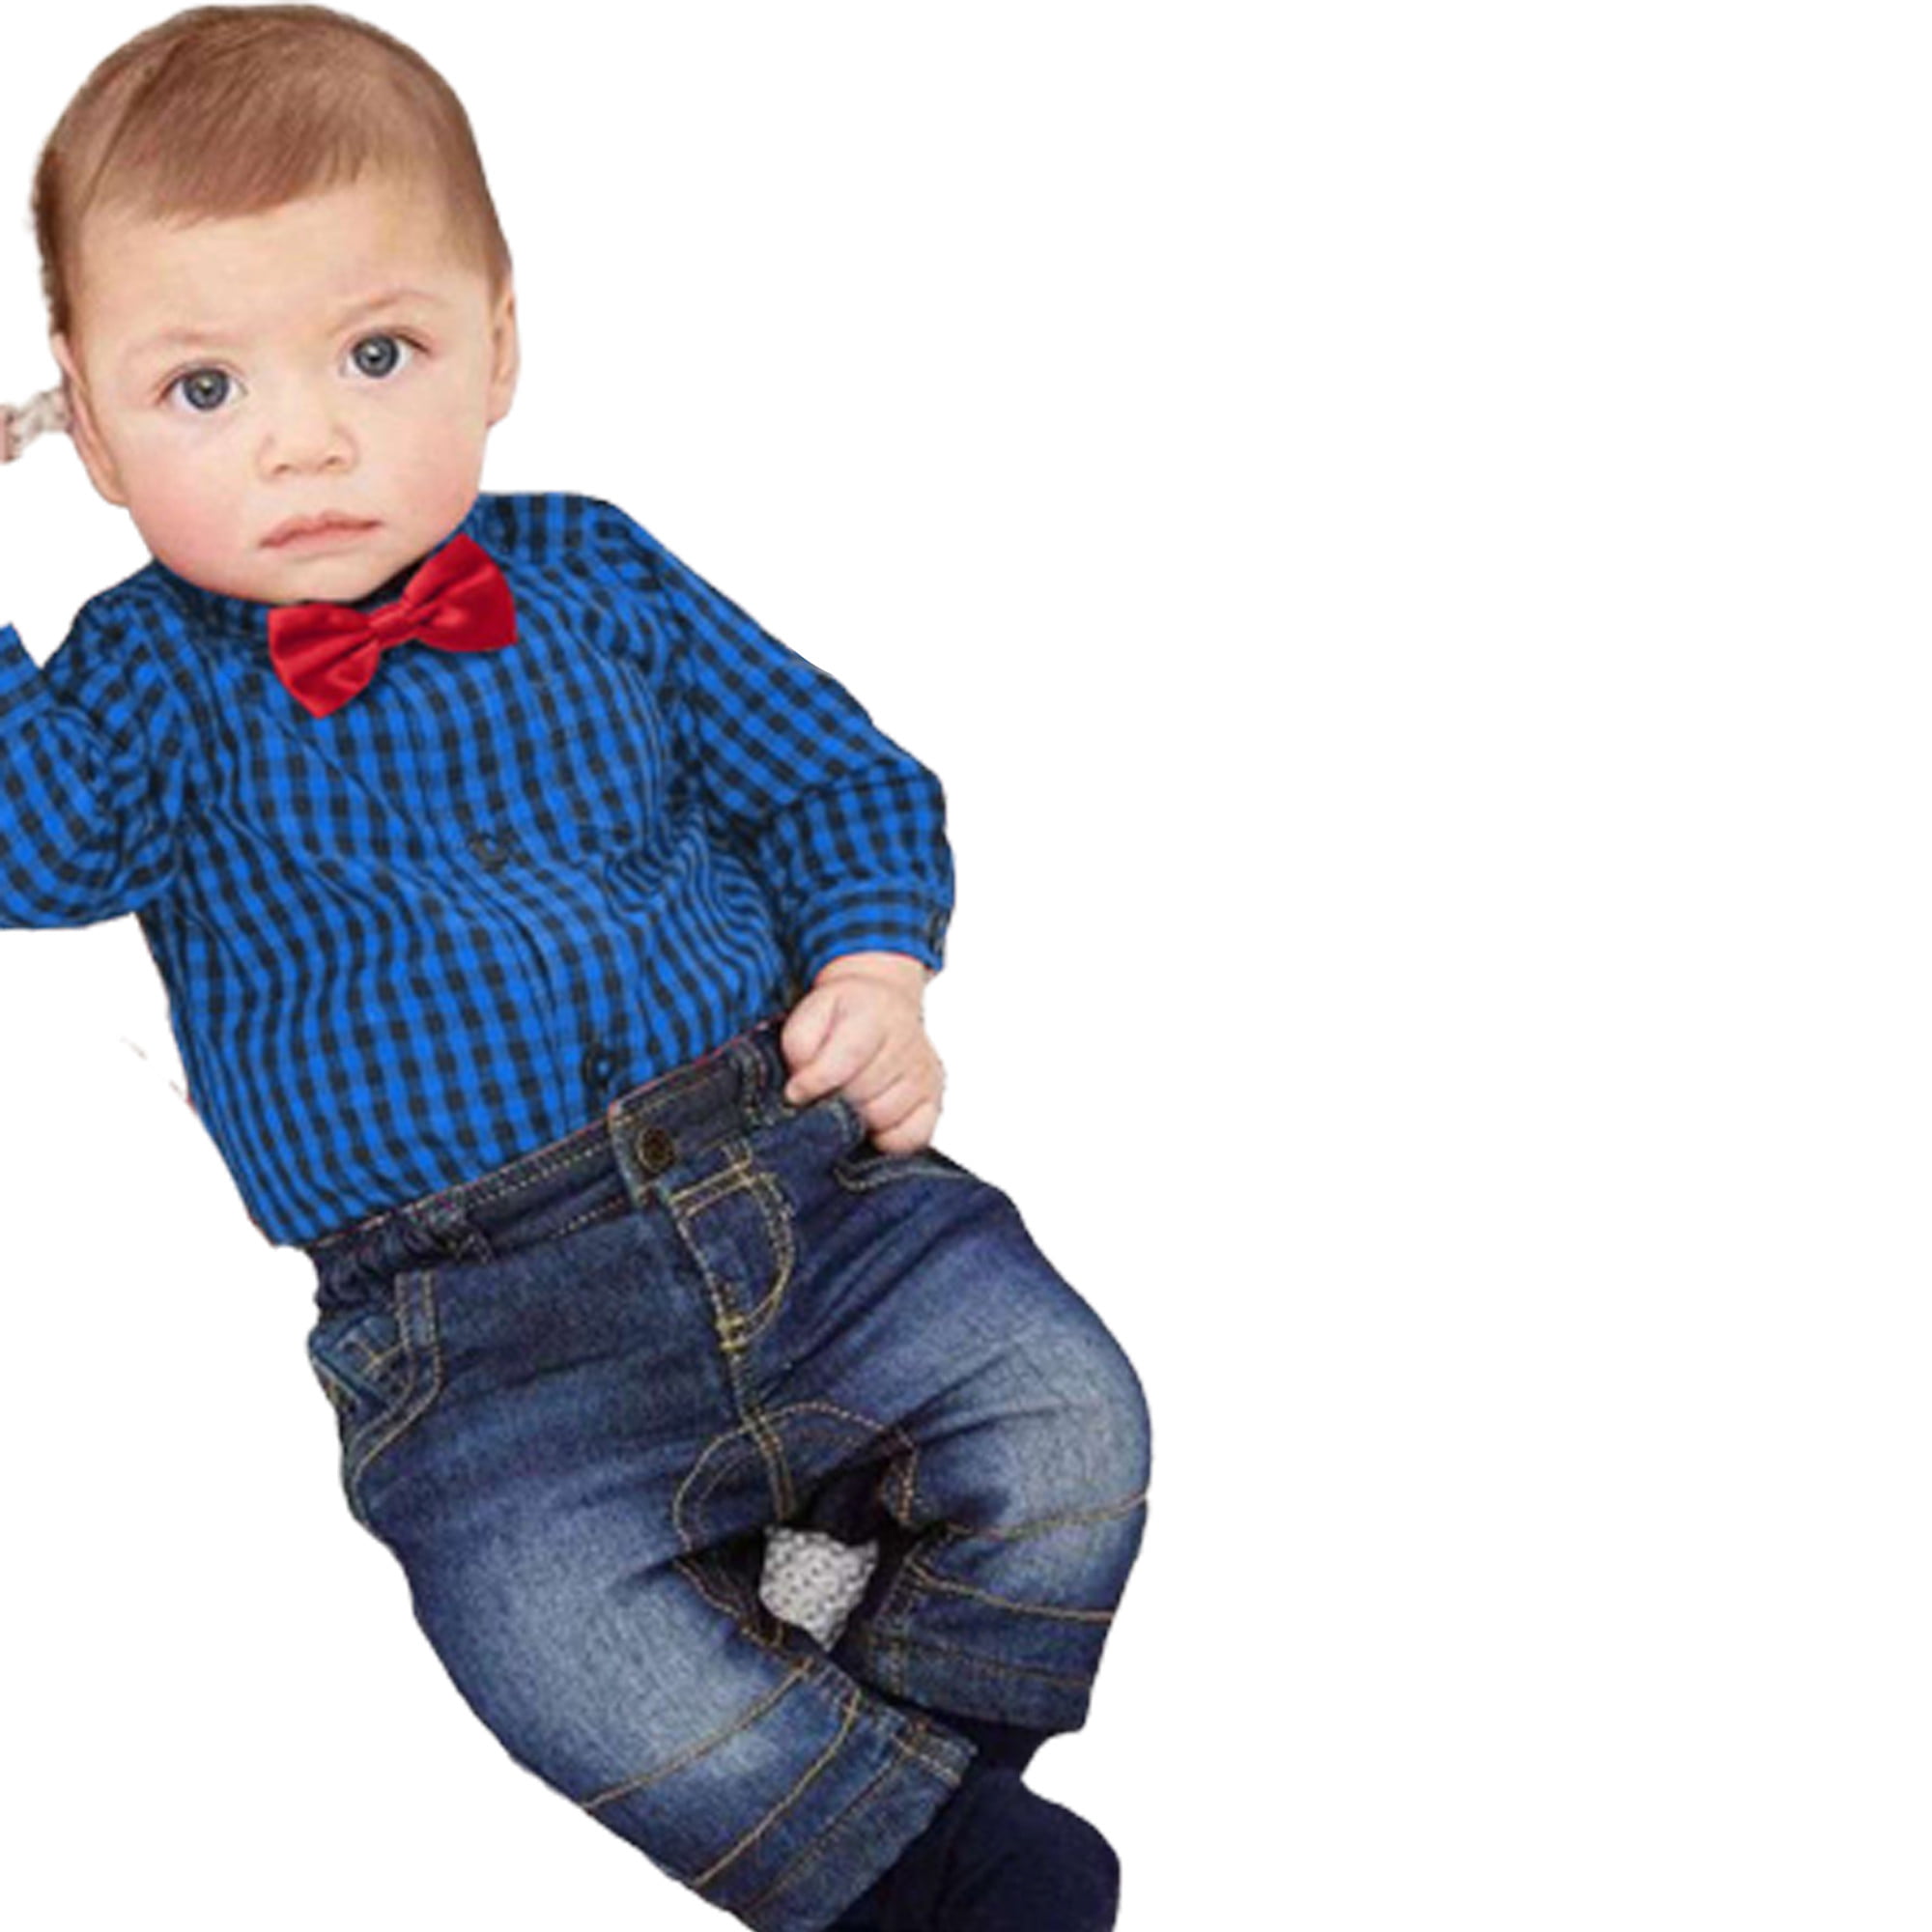 Details about   Wonder Nation Baby Boy 3-Piece Blue Puppy/Stripes jumpsuit outfit Size 0-3M 